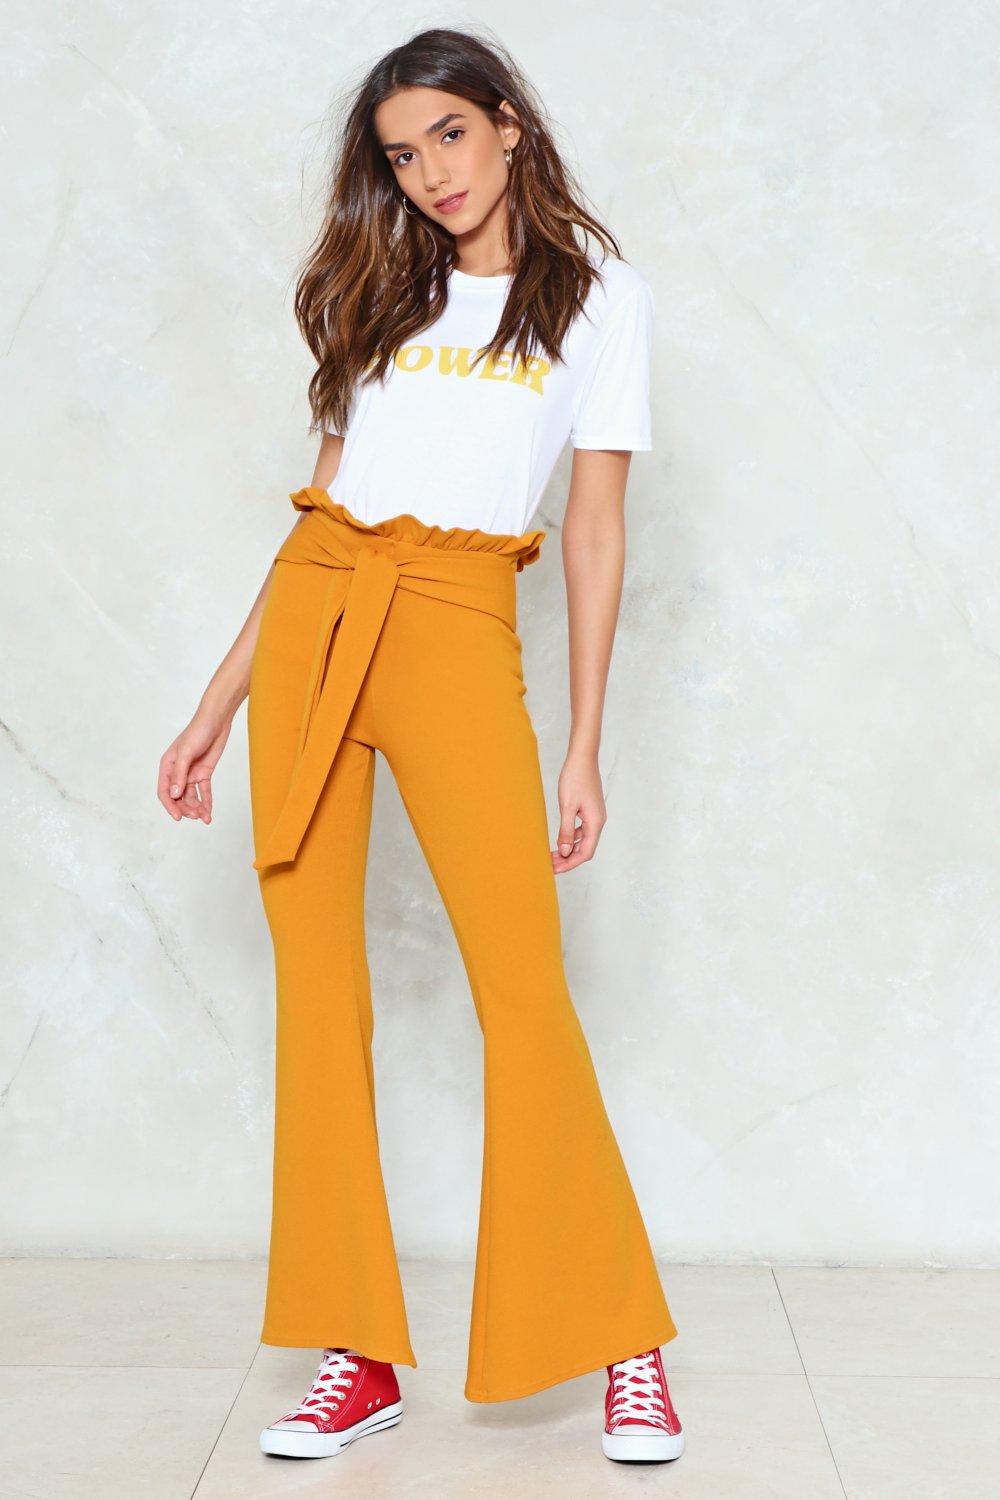 yellow high waisted pants